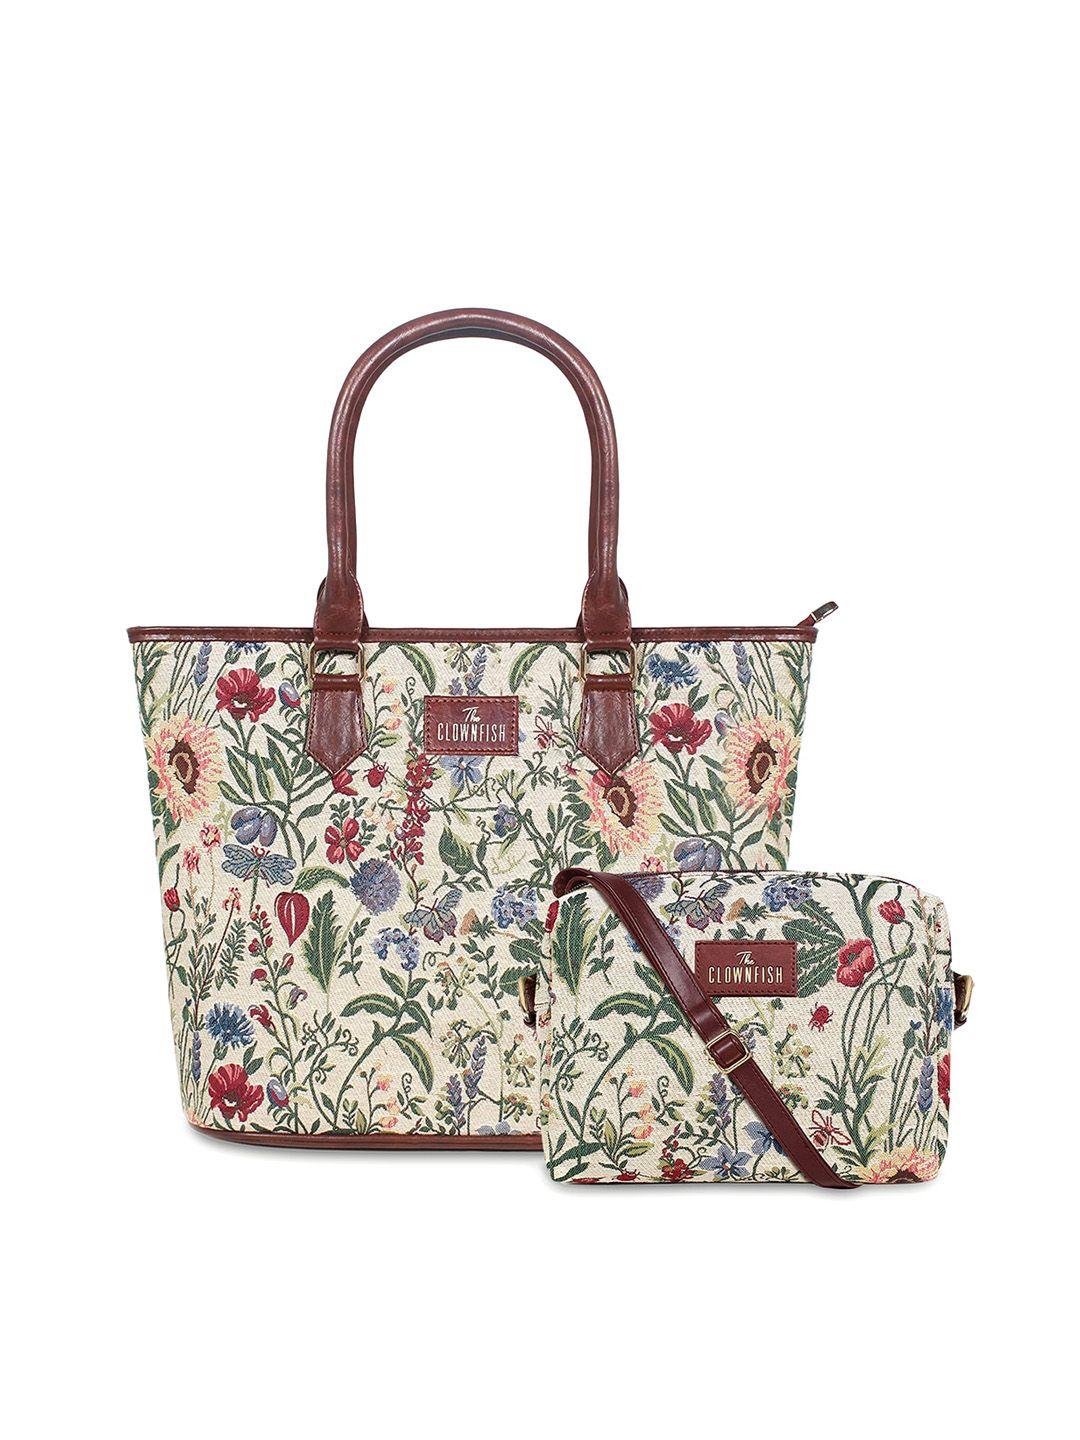 the clownfish floral embroidered leather sling bag & handbag